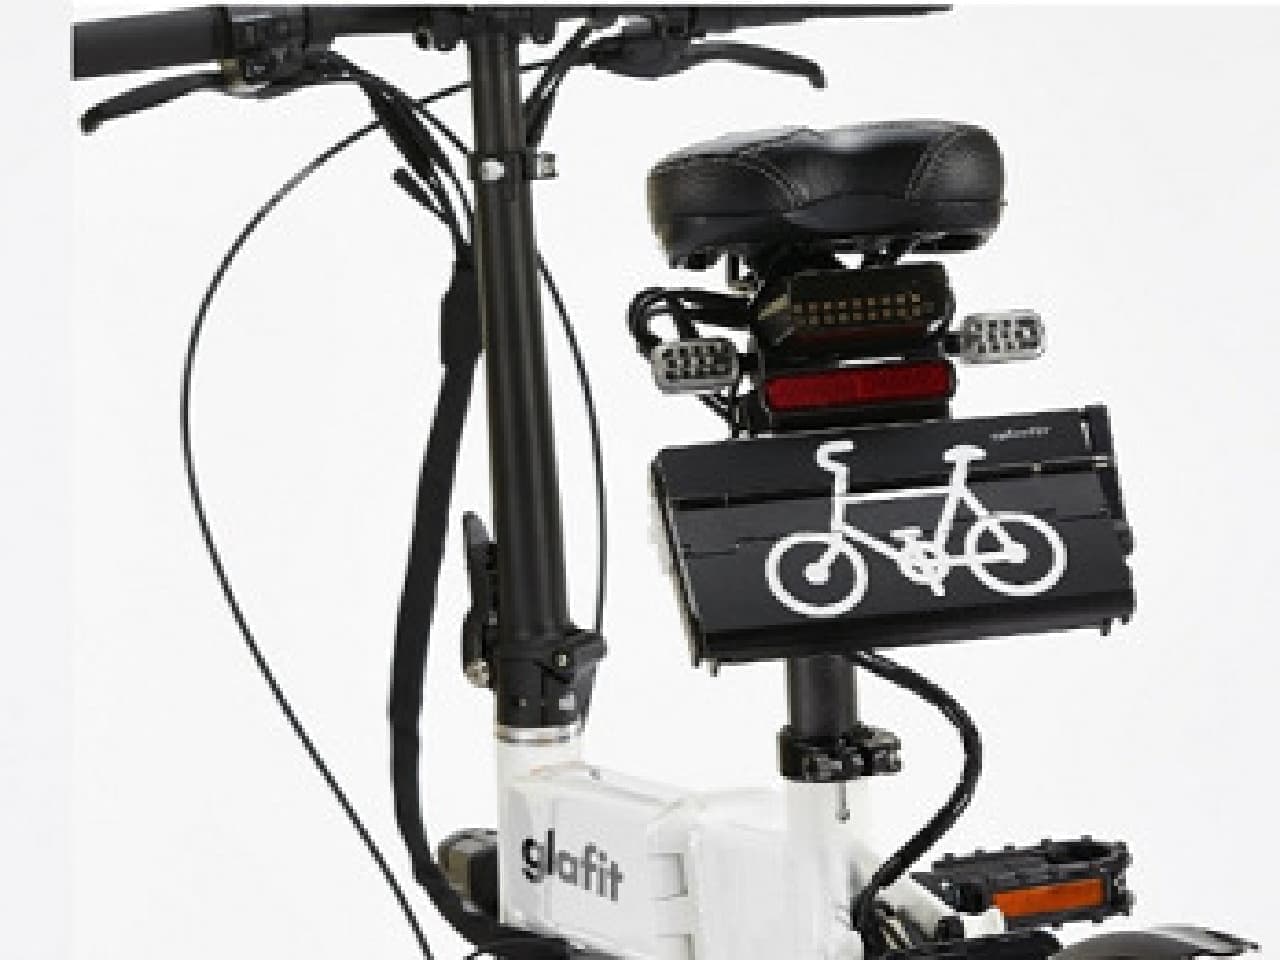 glafitが製造販売する電動モビリティ「二刀流バイク GFR-02」